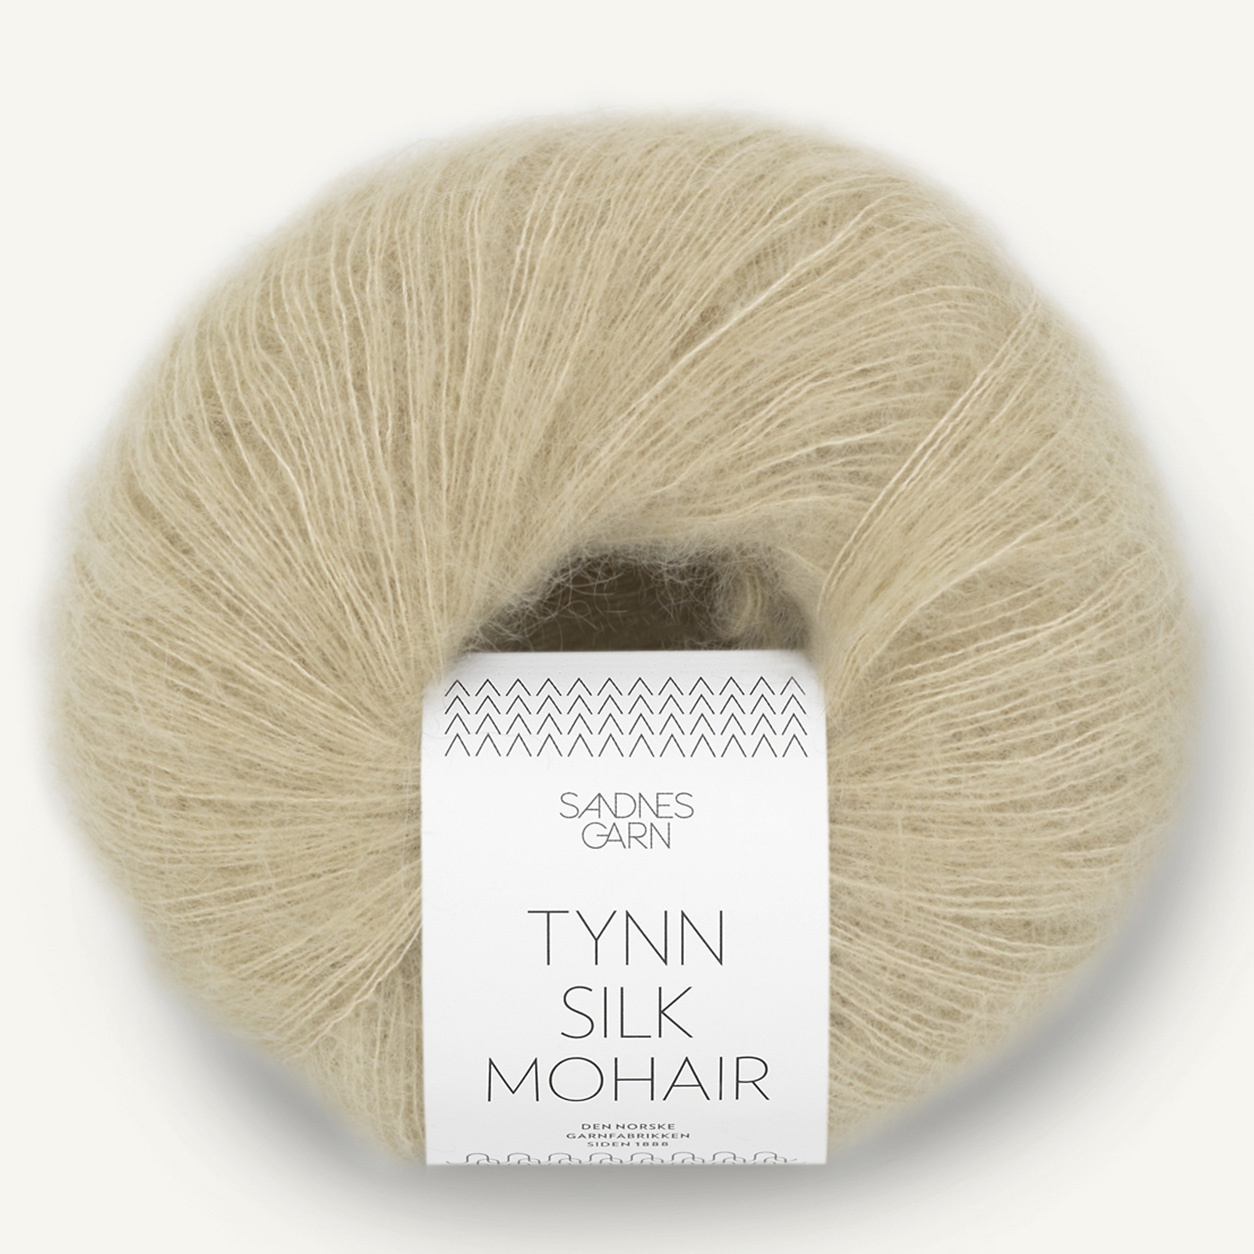 Sandnes Tynn Silk Mohair, 9822, Helles Chinogrün